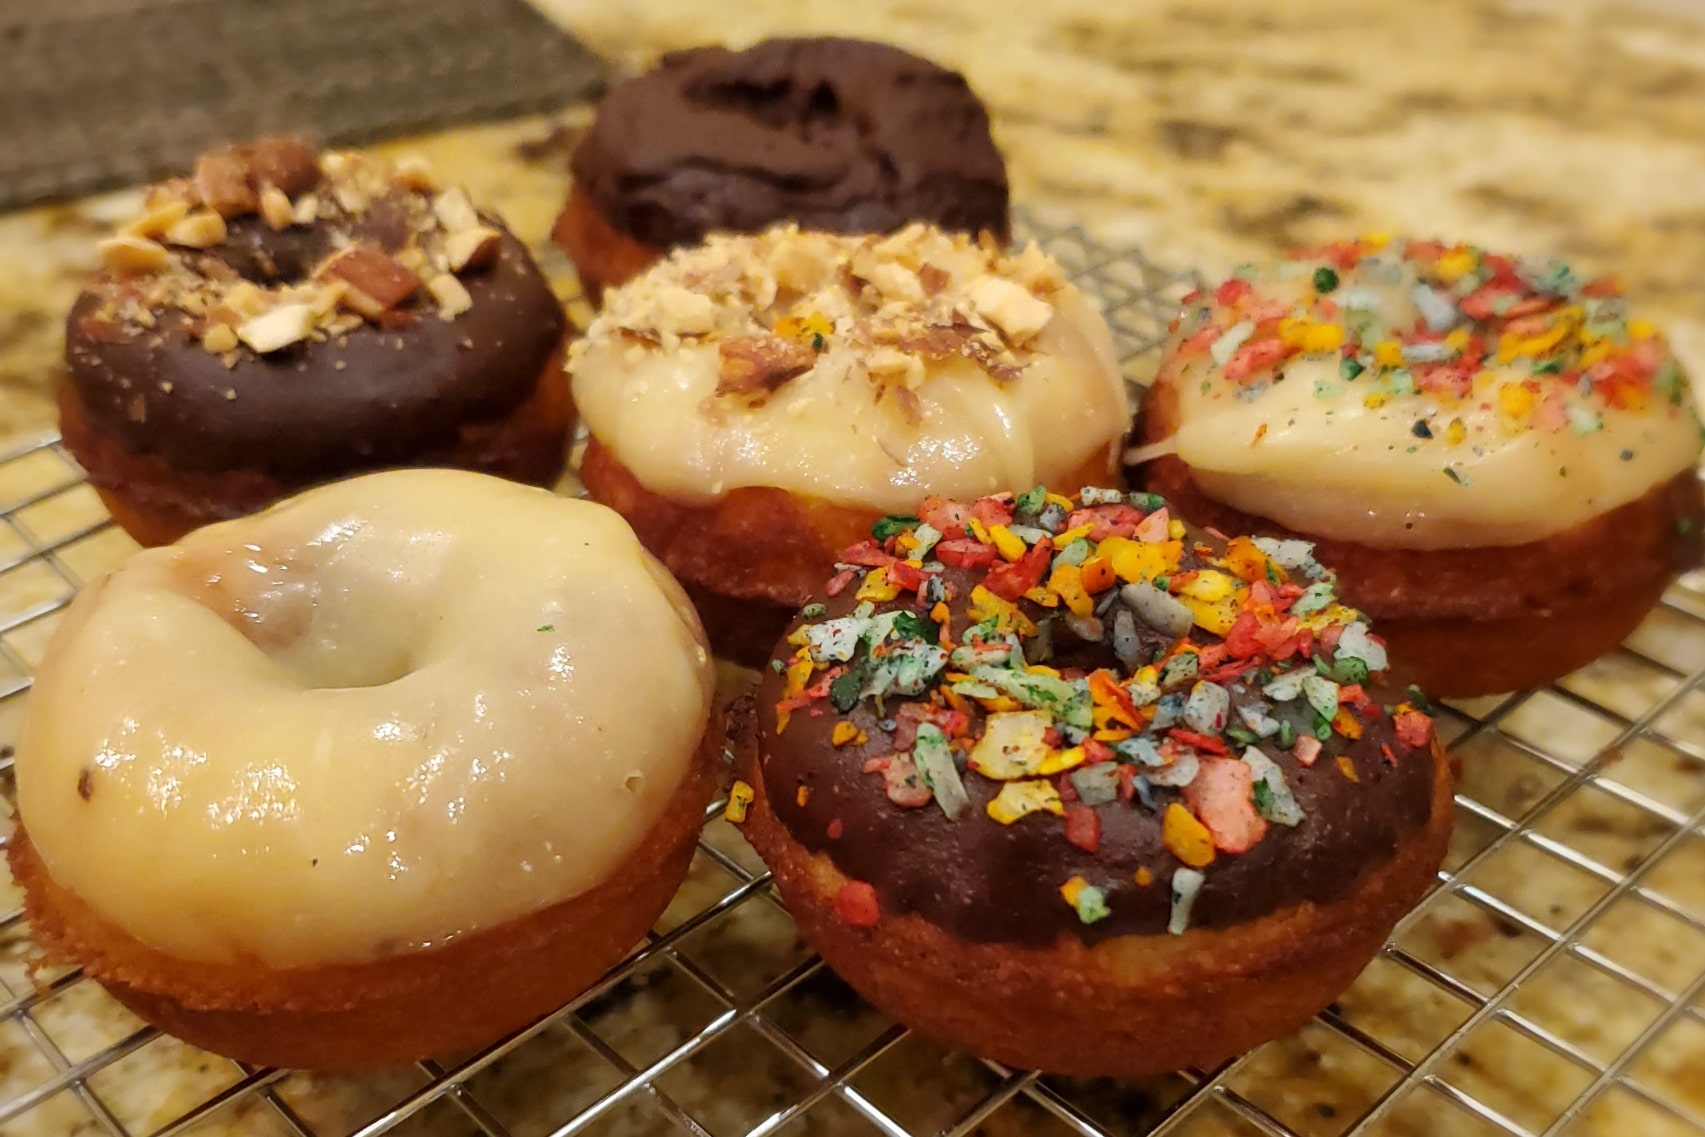 Keto Donuts – Light and fluffy treat